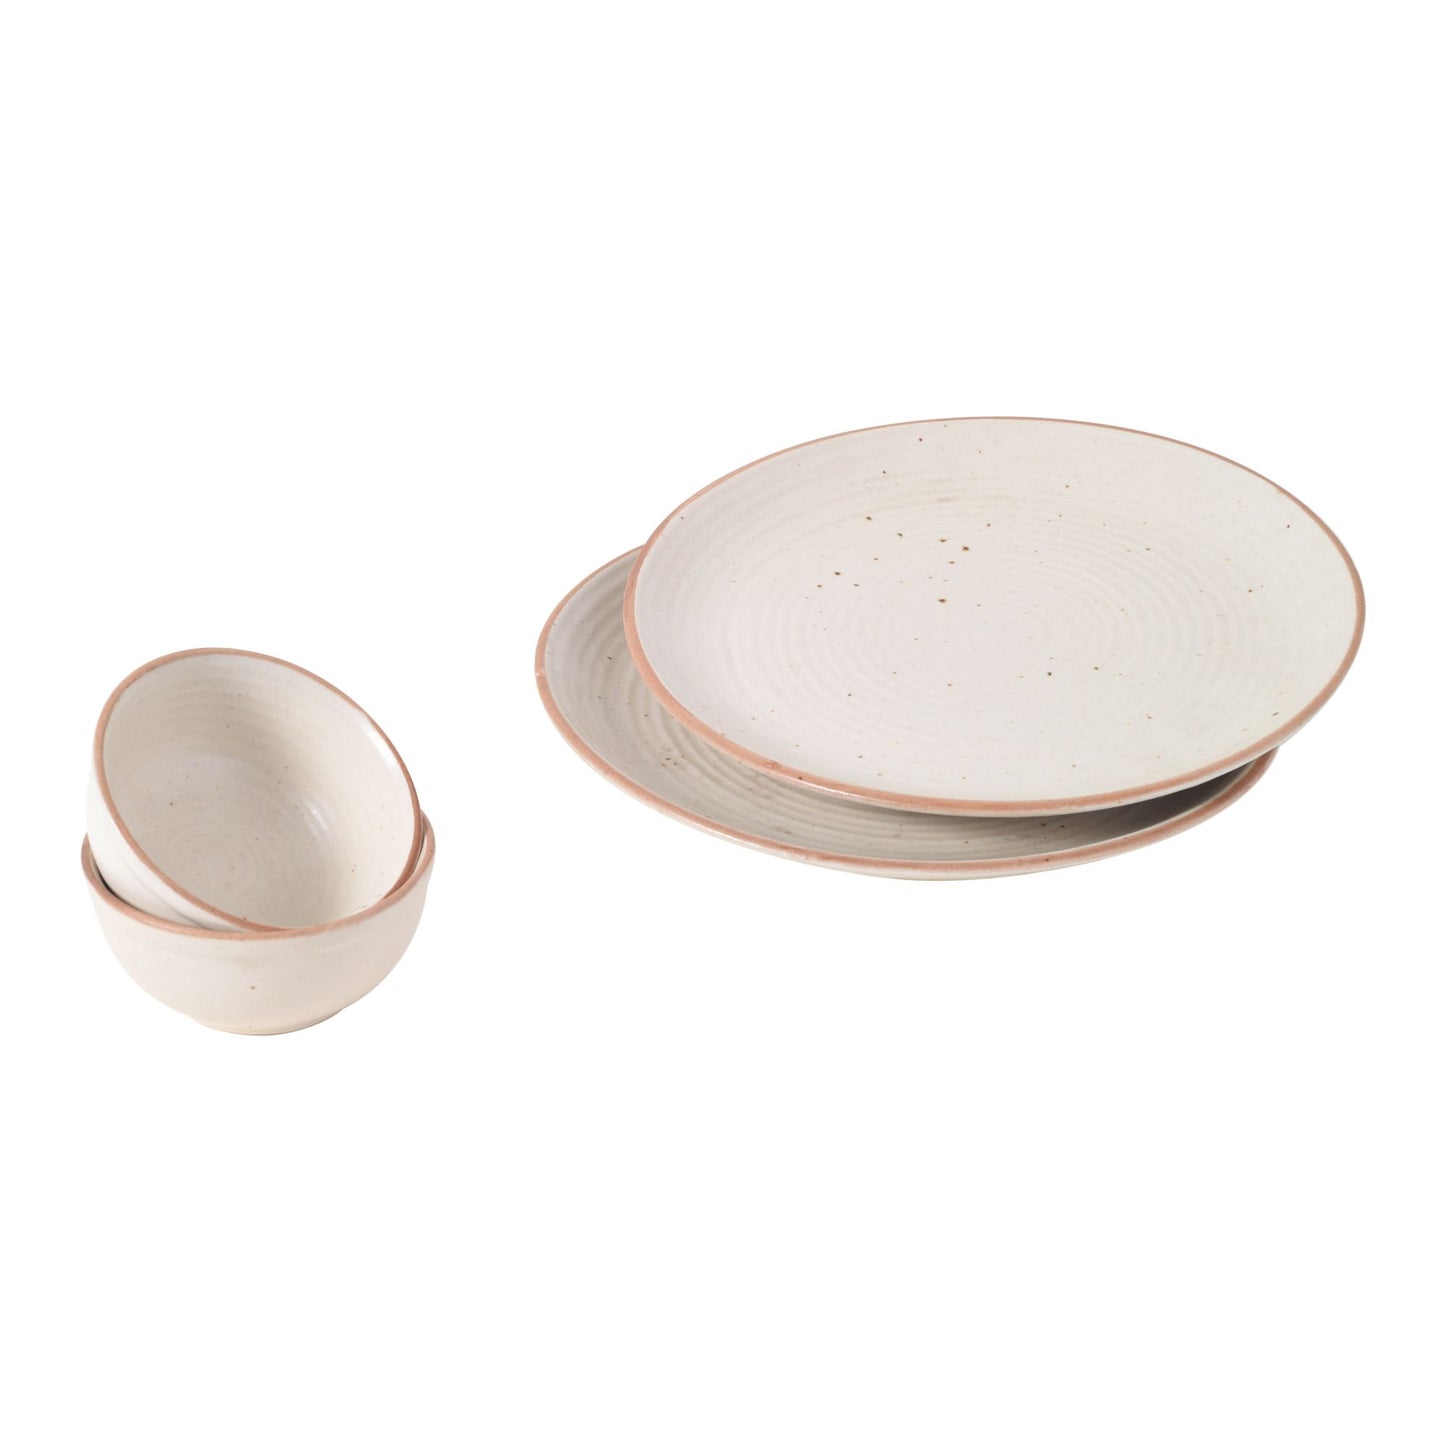 Elysian White Dinner Plates (Set of 2) Plates and 2 Bowls (p-10x10x1, b-4.2x4.2x2